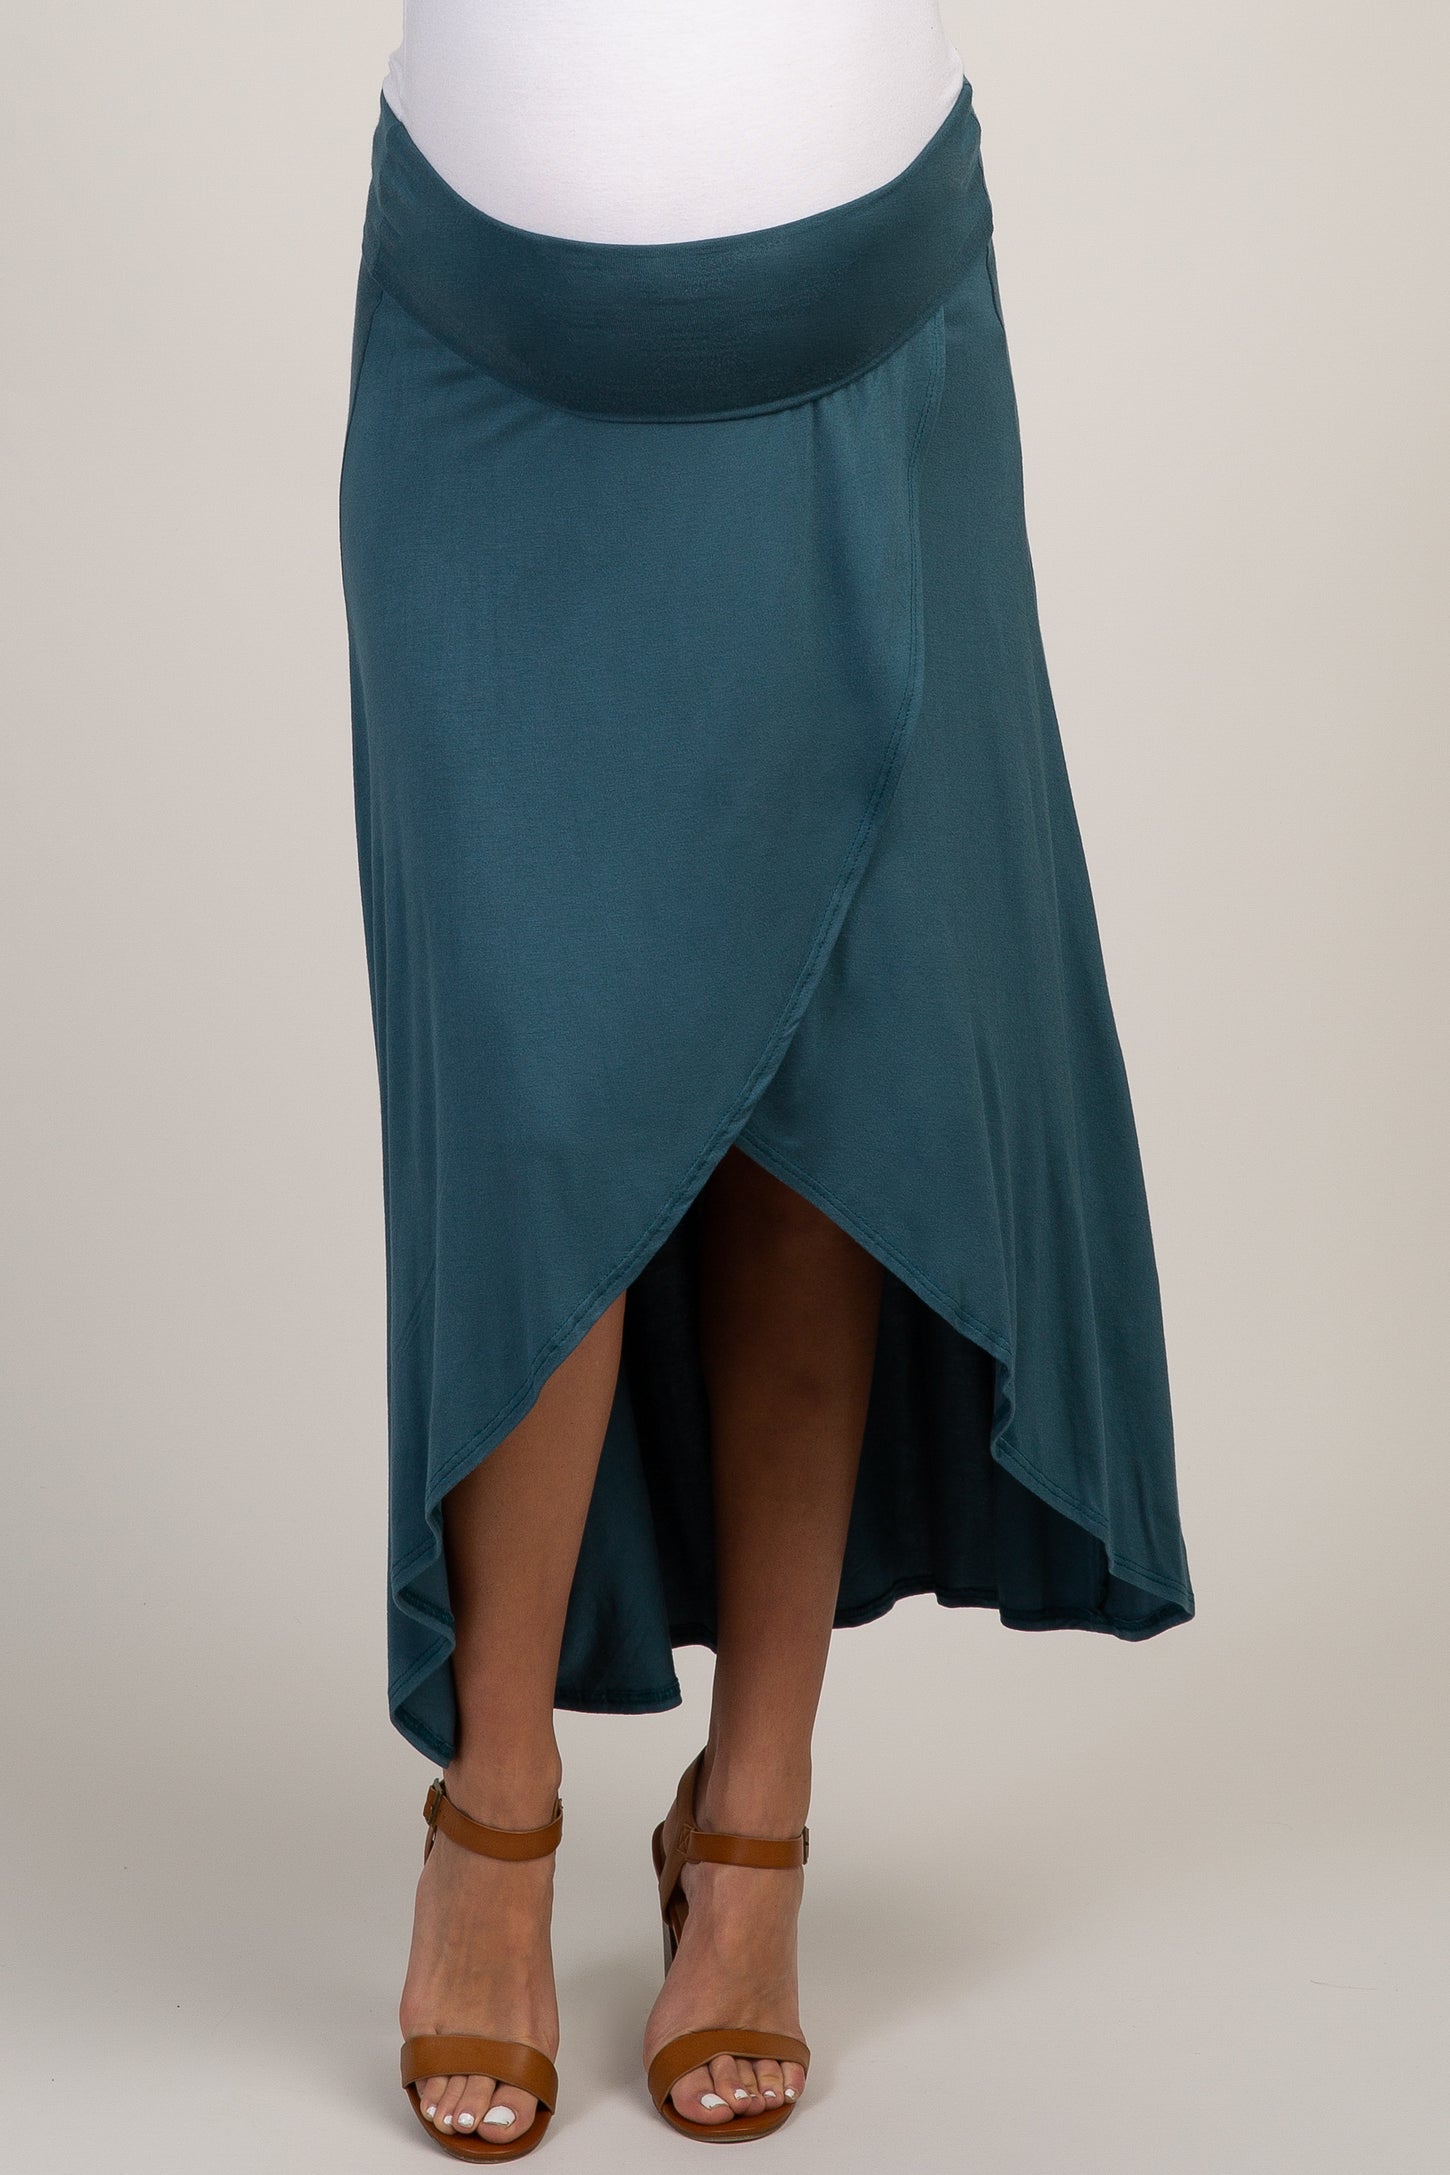 Teal Foldover Hi-Low Maternity Wrap Skirt